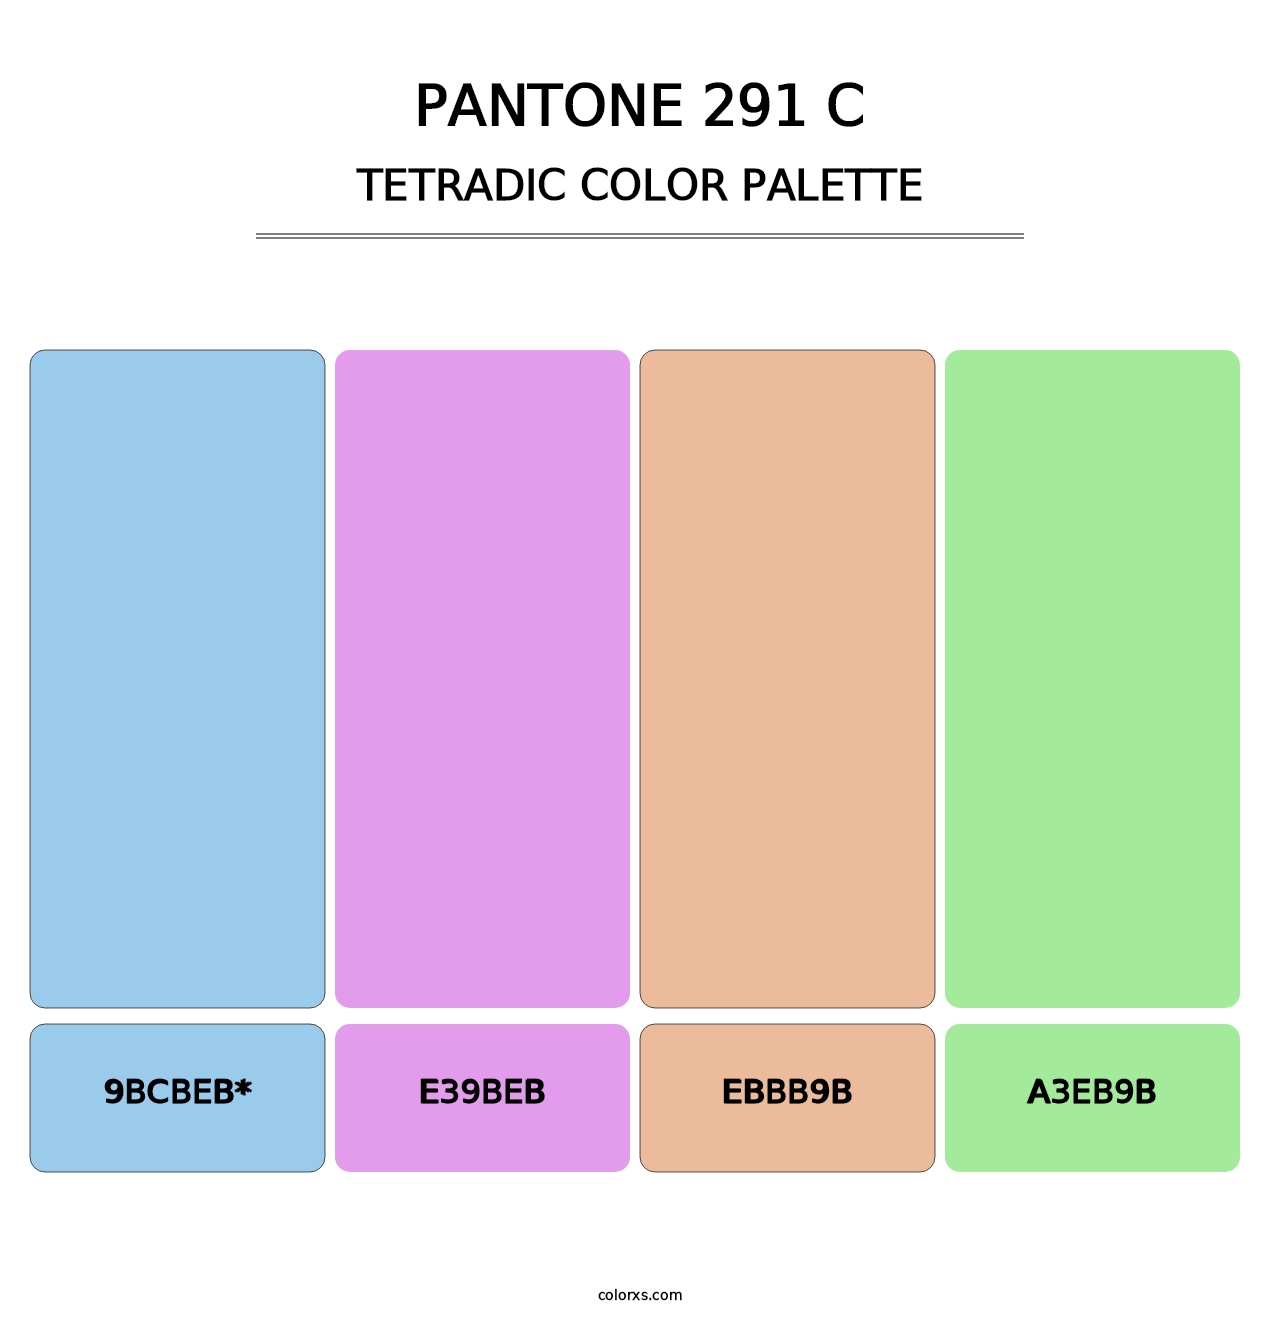 PANTONE 291 C - Tetradic Color Palette